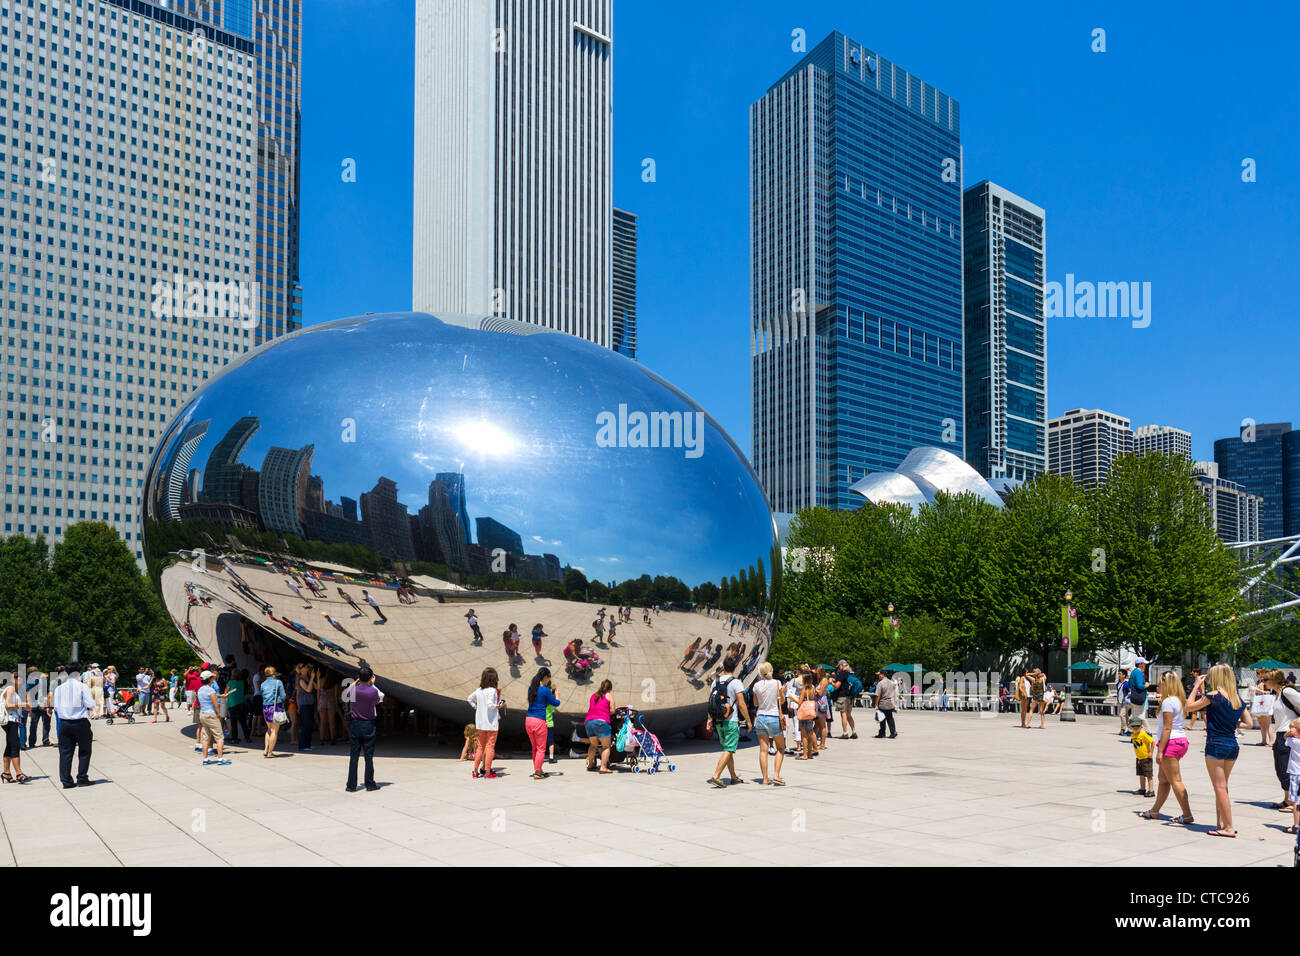 Anish Kapoor 'Cloud Gate' scultura in Millennium Park di Chicago, Illinois, Stati Uniti d'America Foto Stock